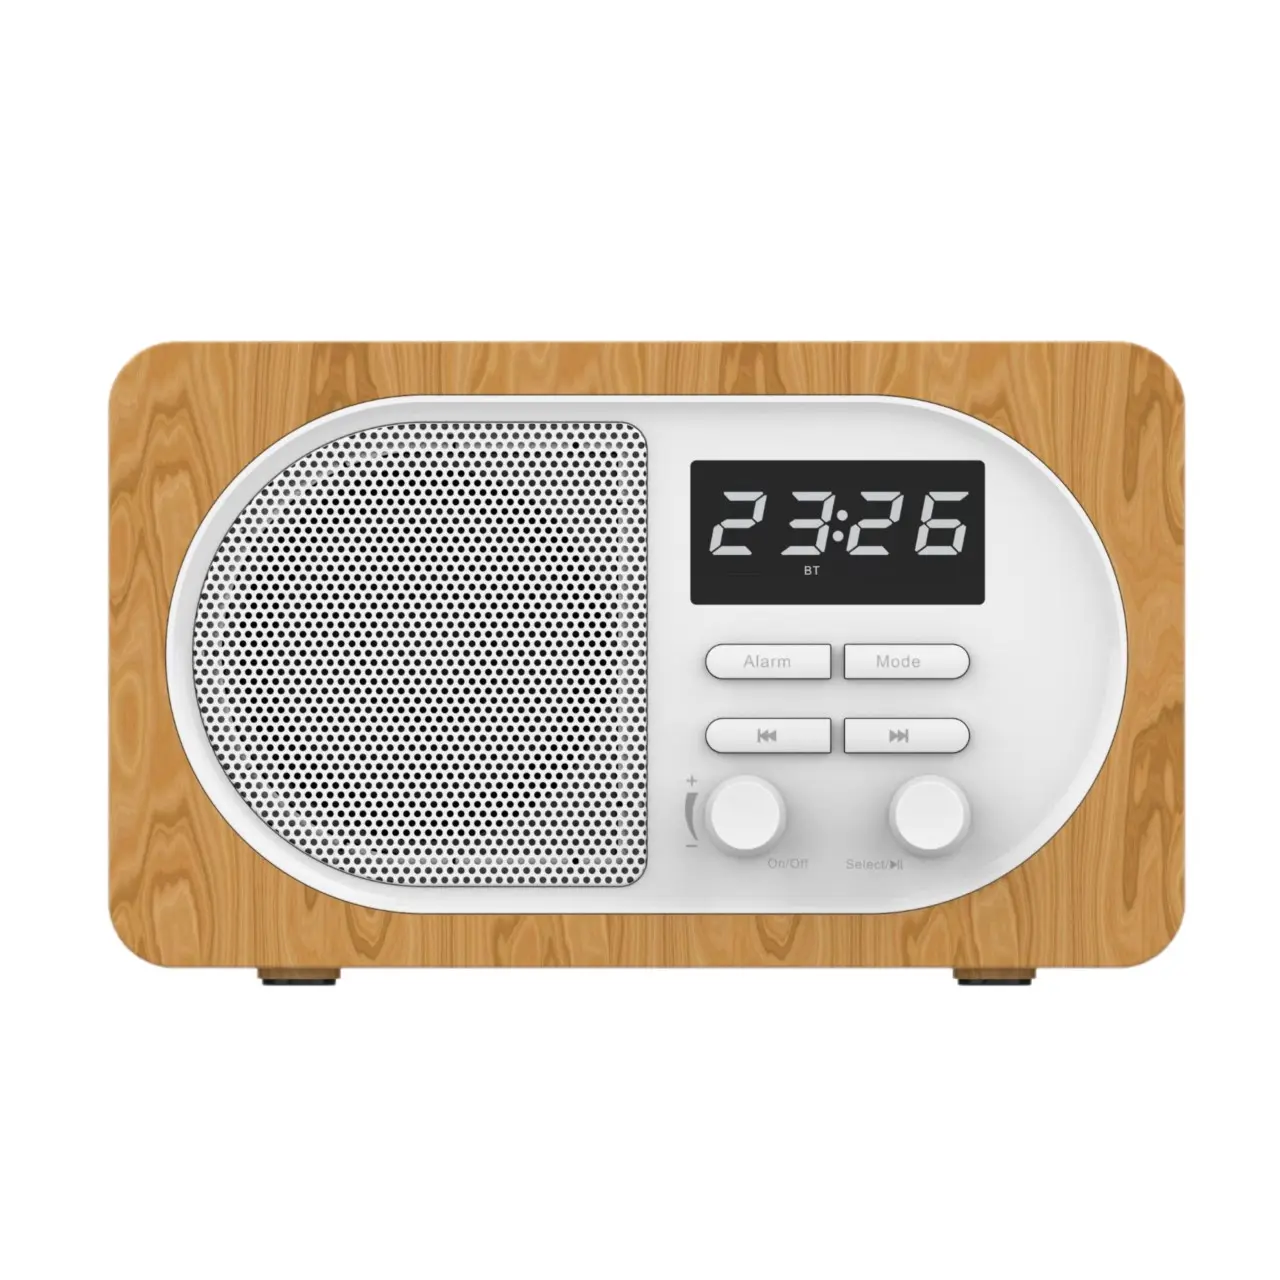 Speaker mode 2023 fcc ce jam alarm rohs BT 5.0 speaker portabel mini nirkabel pesta FM warna kayu